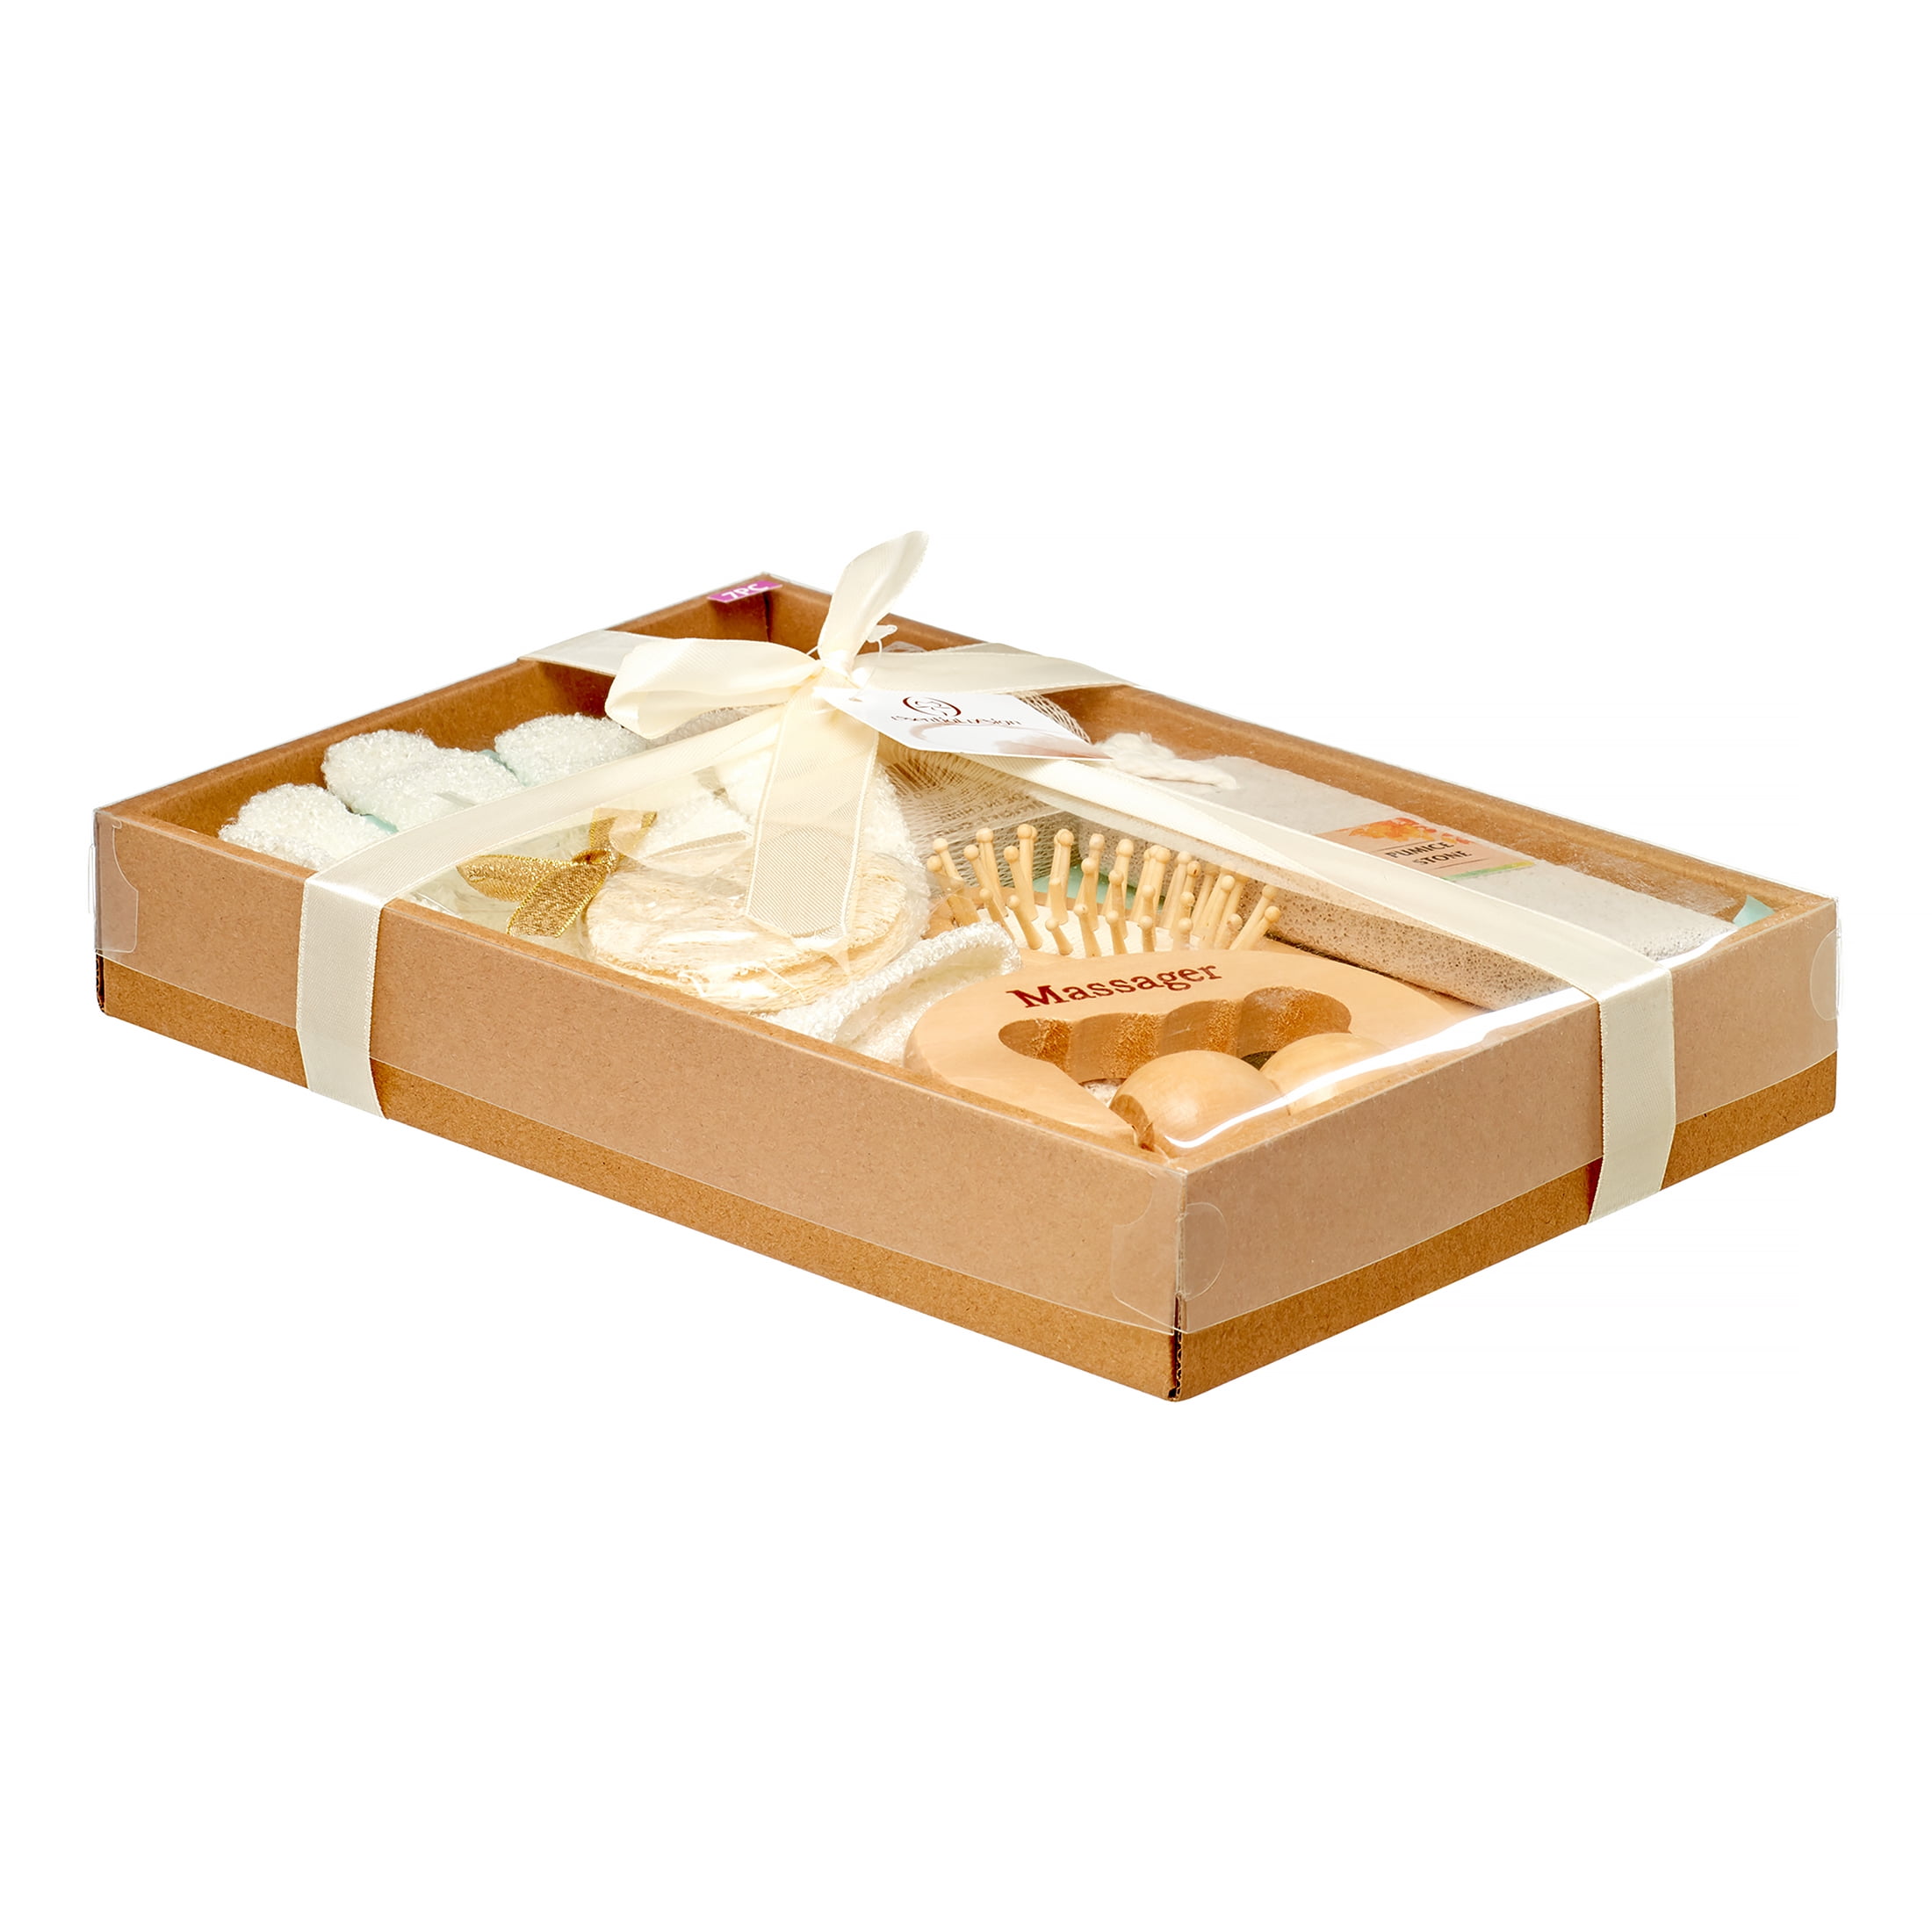 Essential Design Luxury Bath & Spa Gift Basket Set with Wood